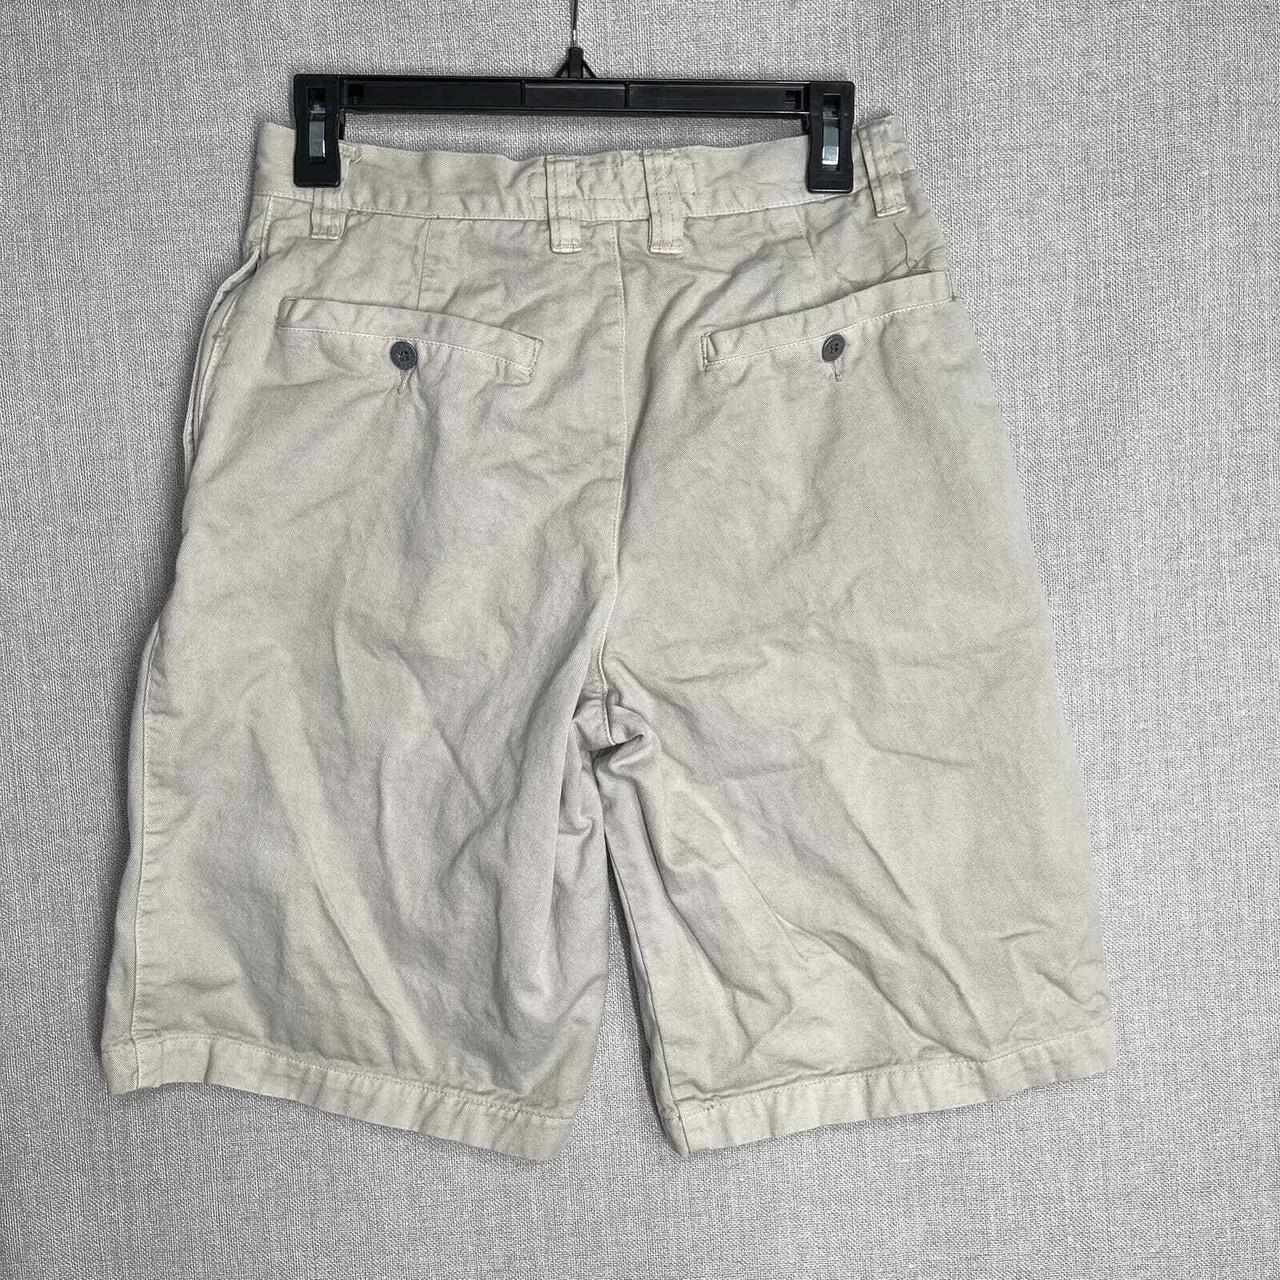 Union Bay Men's Shorts (2)